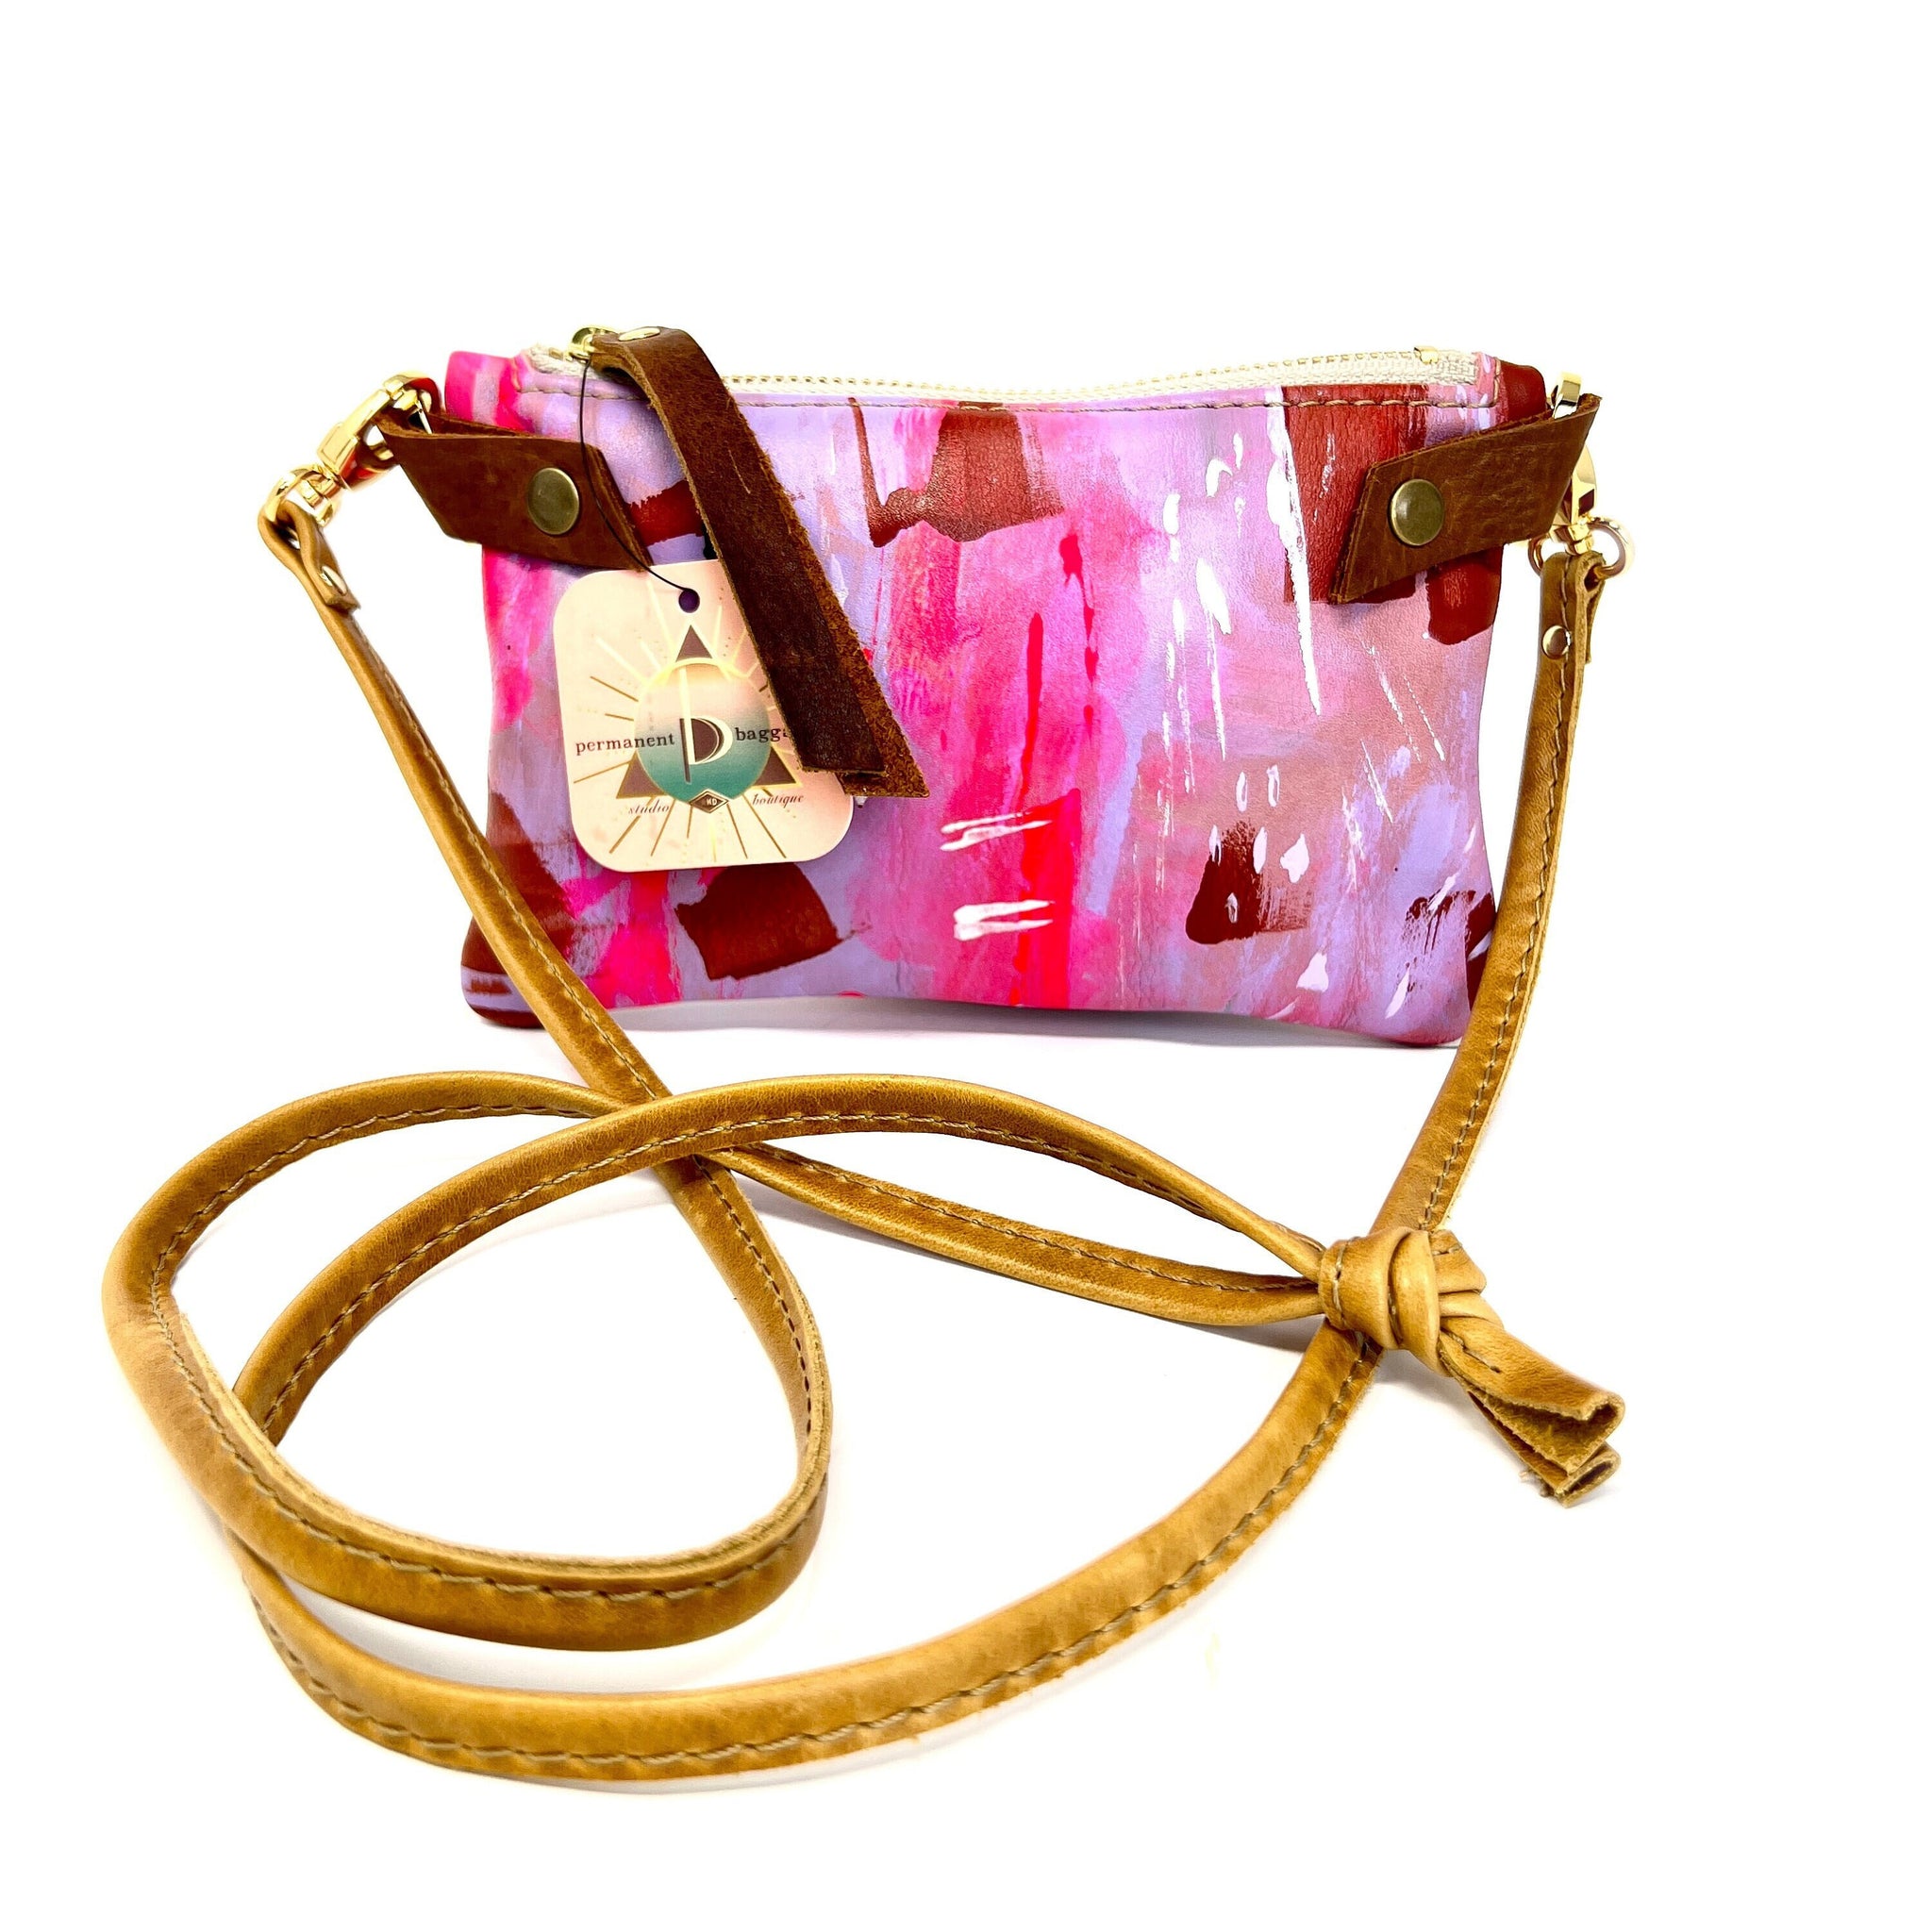 Kate Spade Large Crossbody Bag - Brown/Taupe leather, black straps, gold  details | Large crossbody bags, Crossbody bag, Kate spade